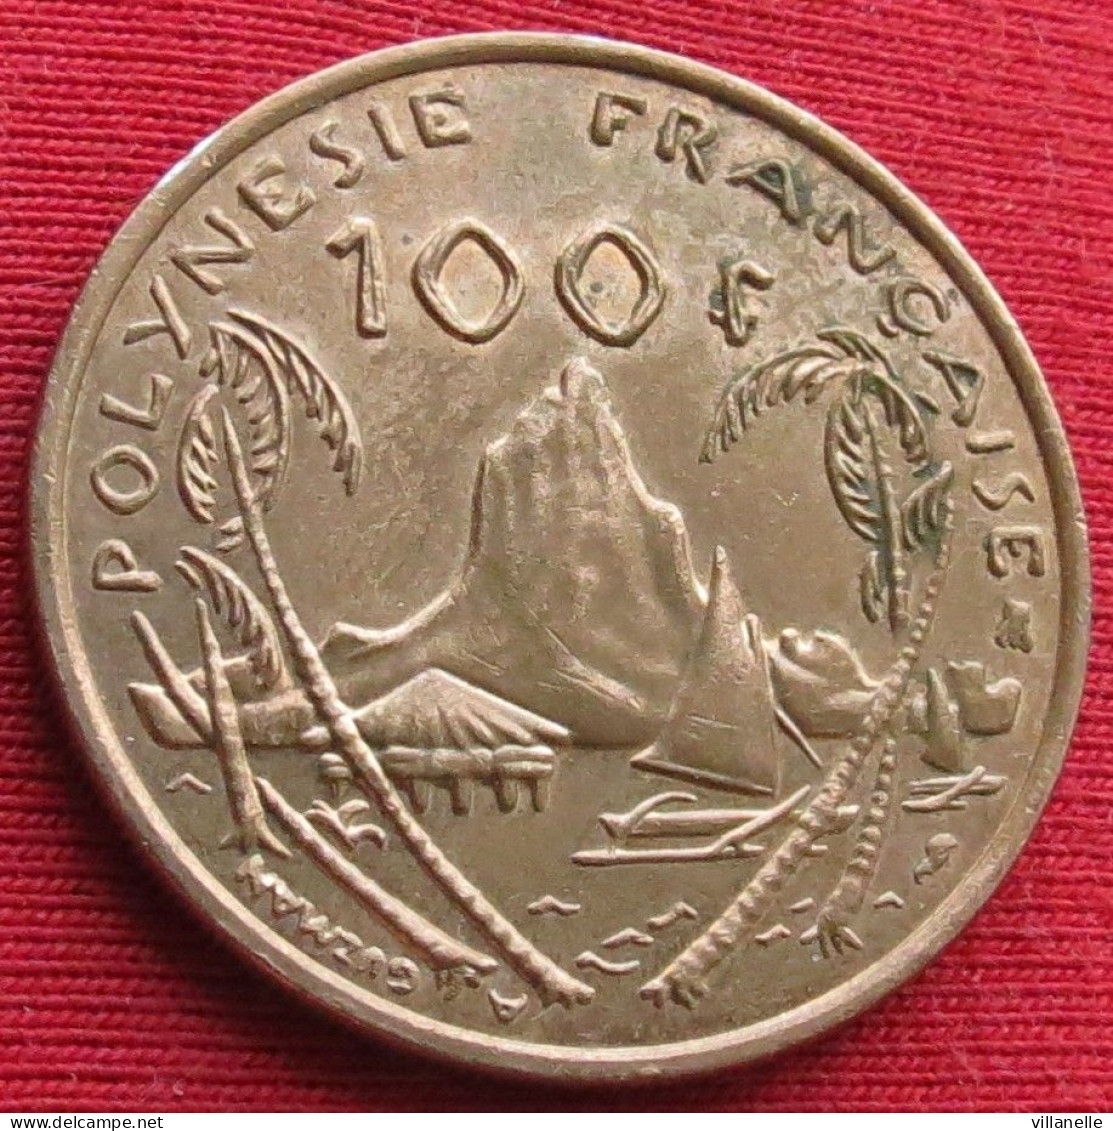 French Polynesia 100 Francs 1995 KM# 14 Lt 1567 *V1T Polynesie Polinesia - Französisch-Polynesien